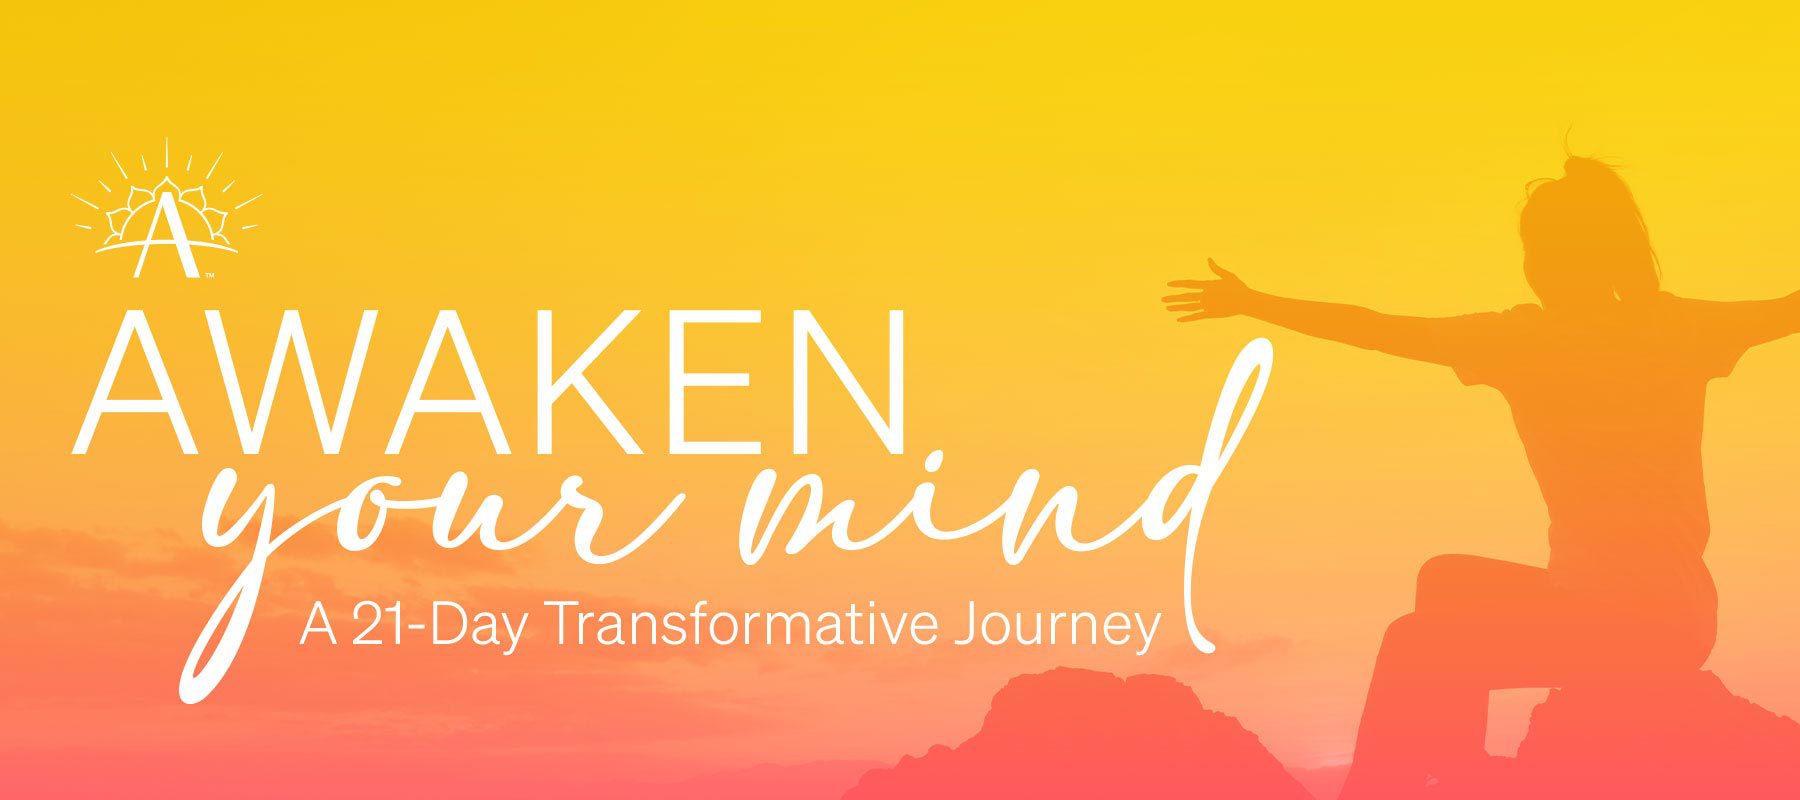 21-day transformative journey